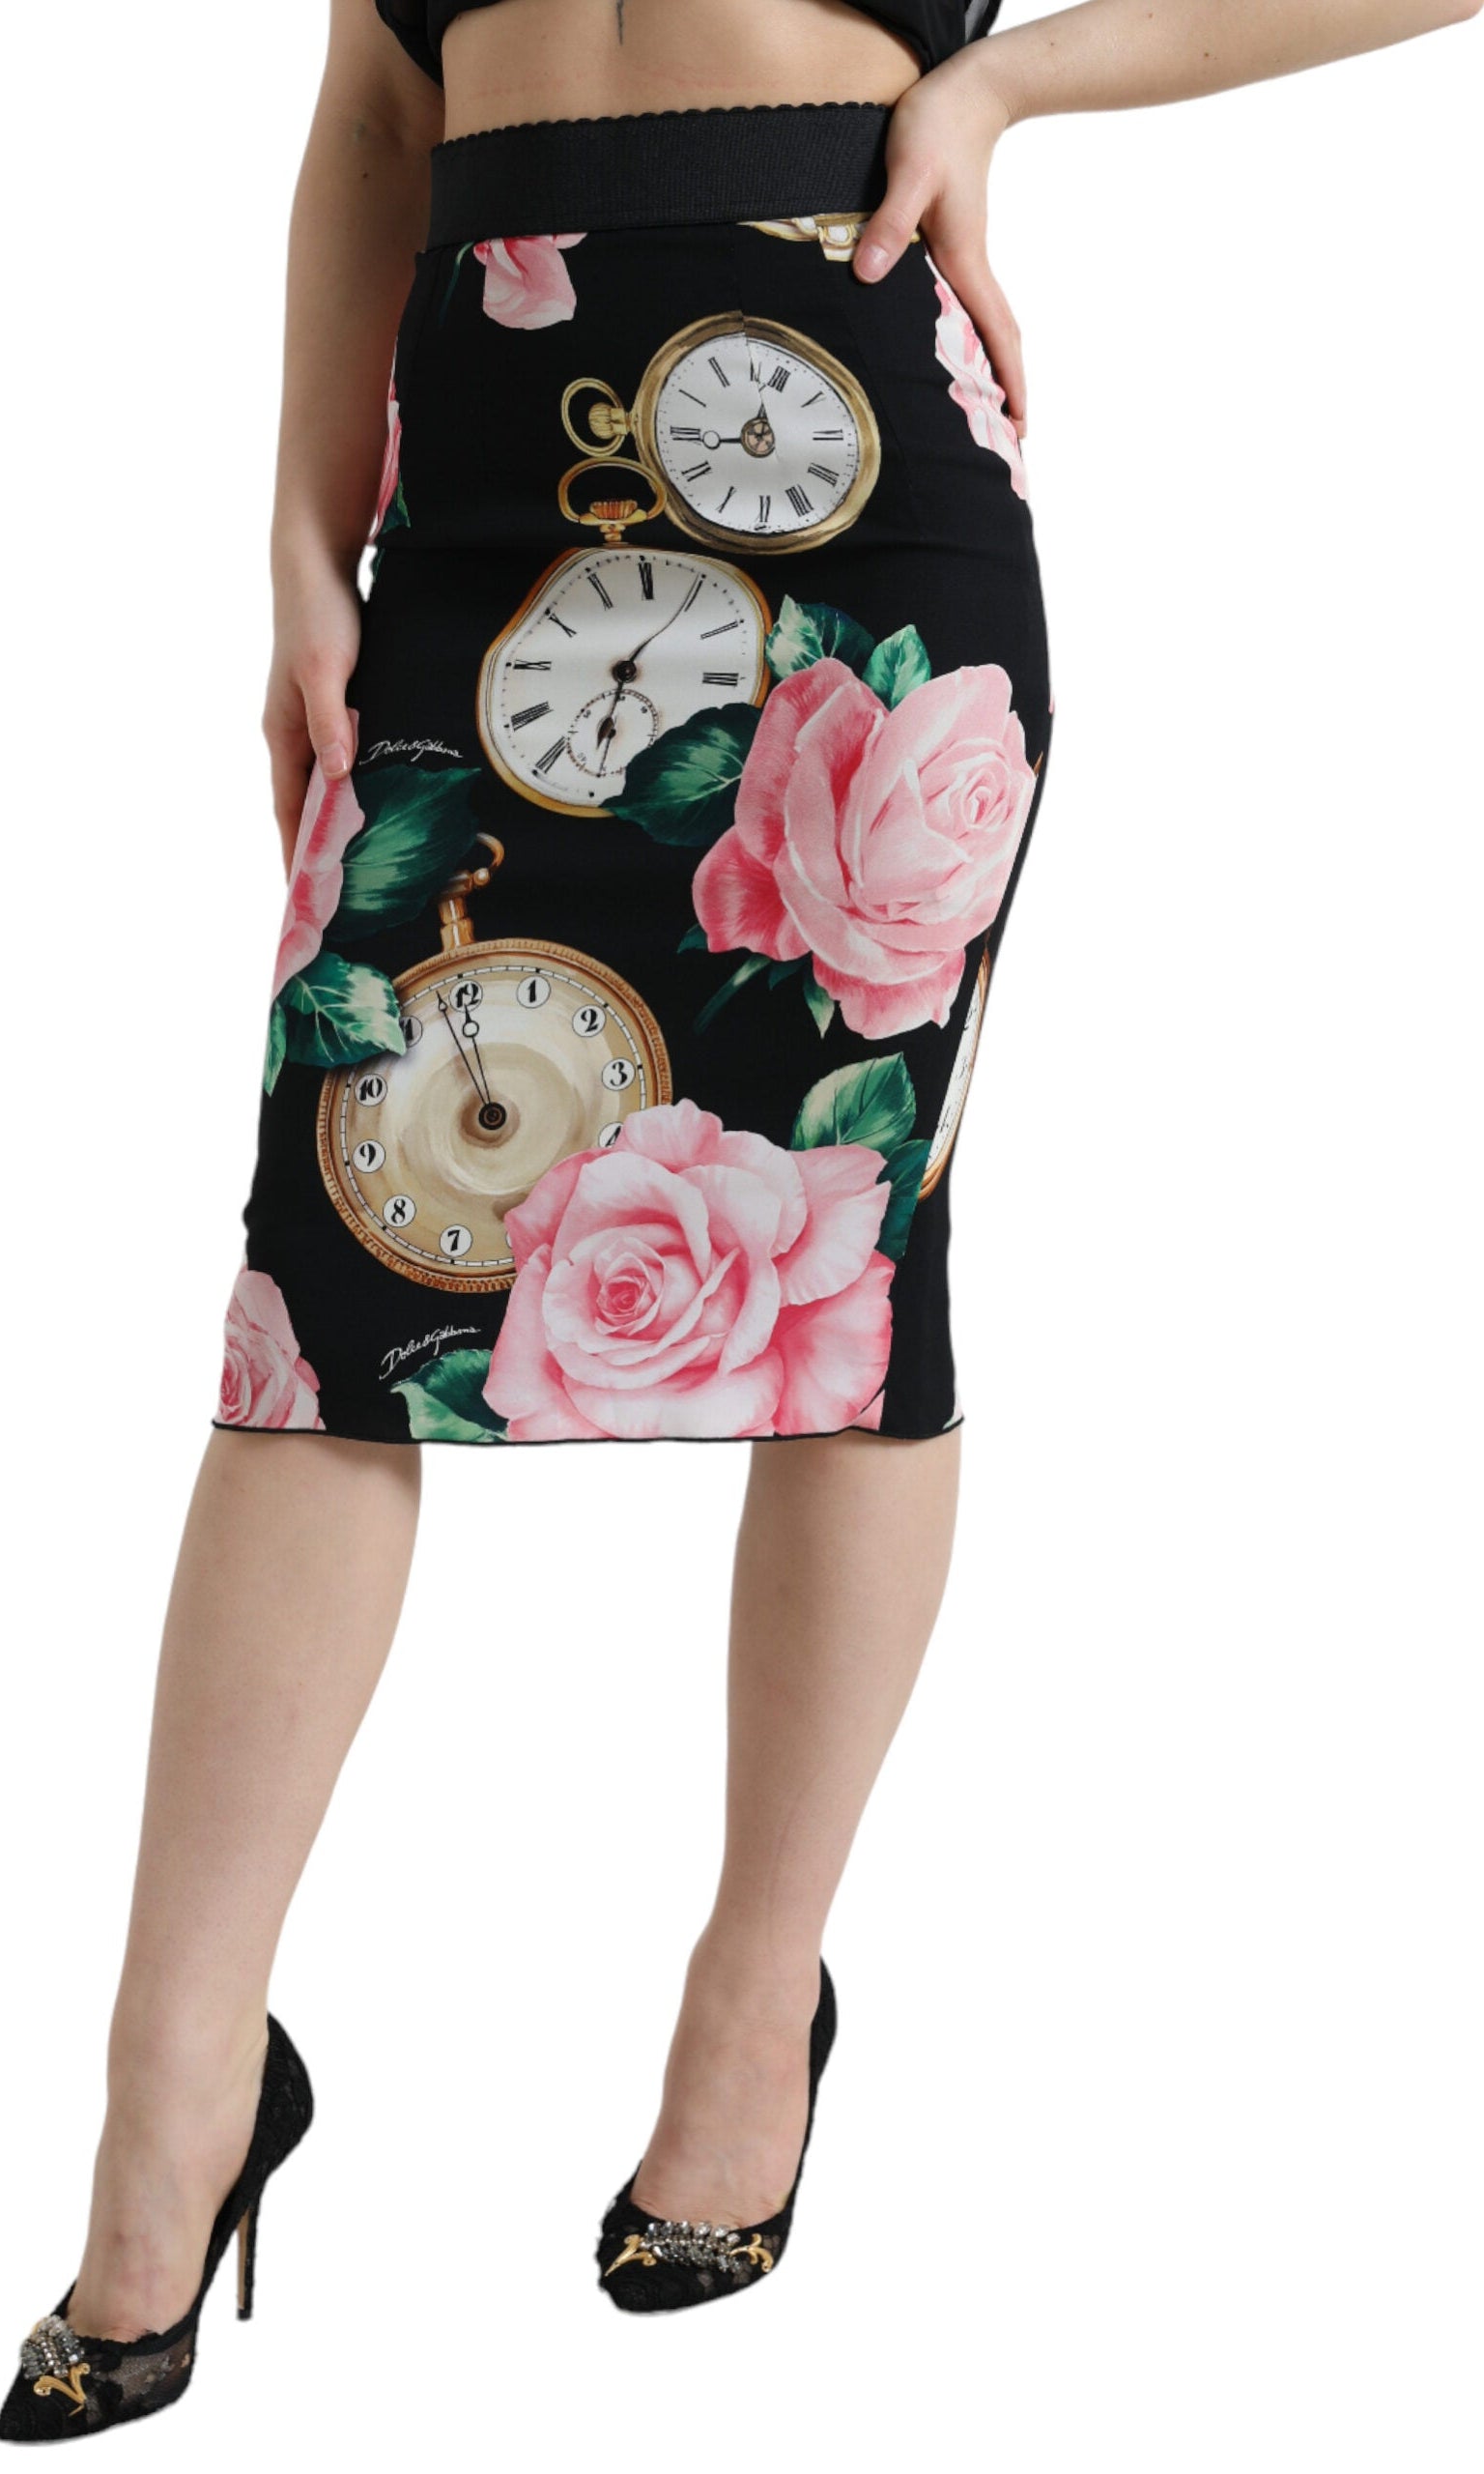 Dolce & Gabbana Black Rose Clock High Waist Pencil Cut Skirt GENUINE AUTHENTIC BRAND LLC